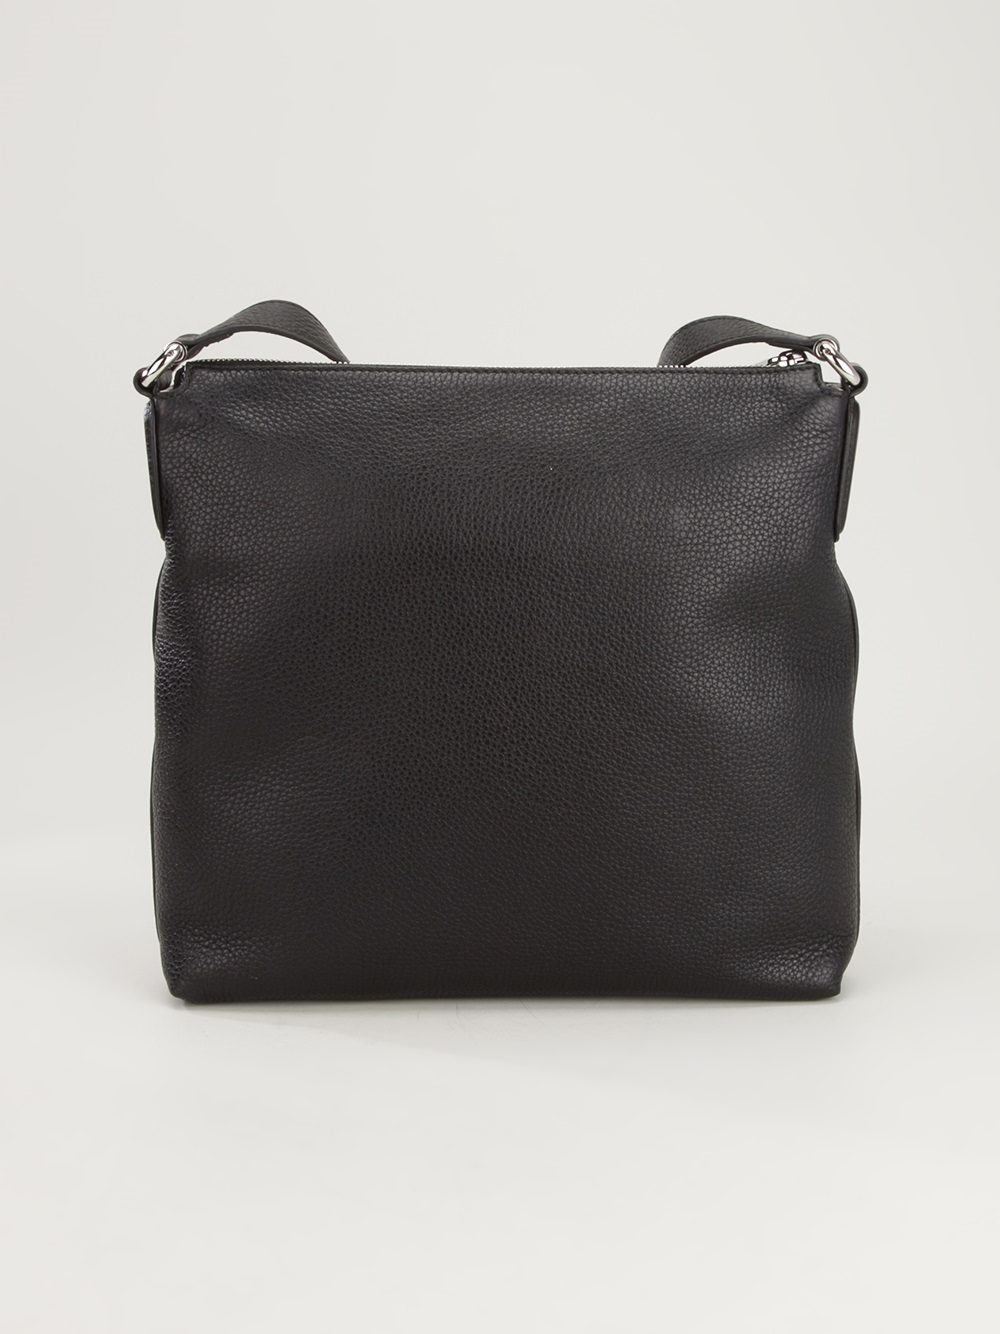 Lyst - Gucci Small Square Shoulder Bag in Black for Men